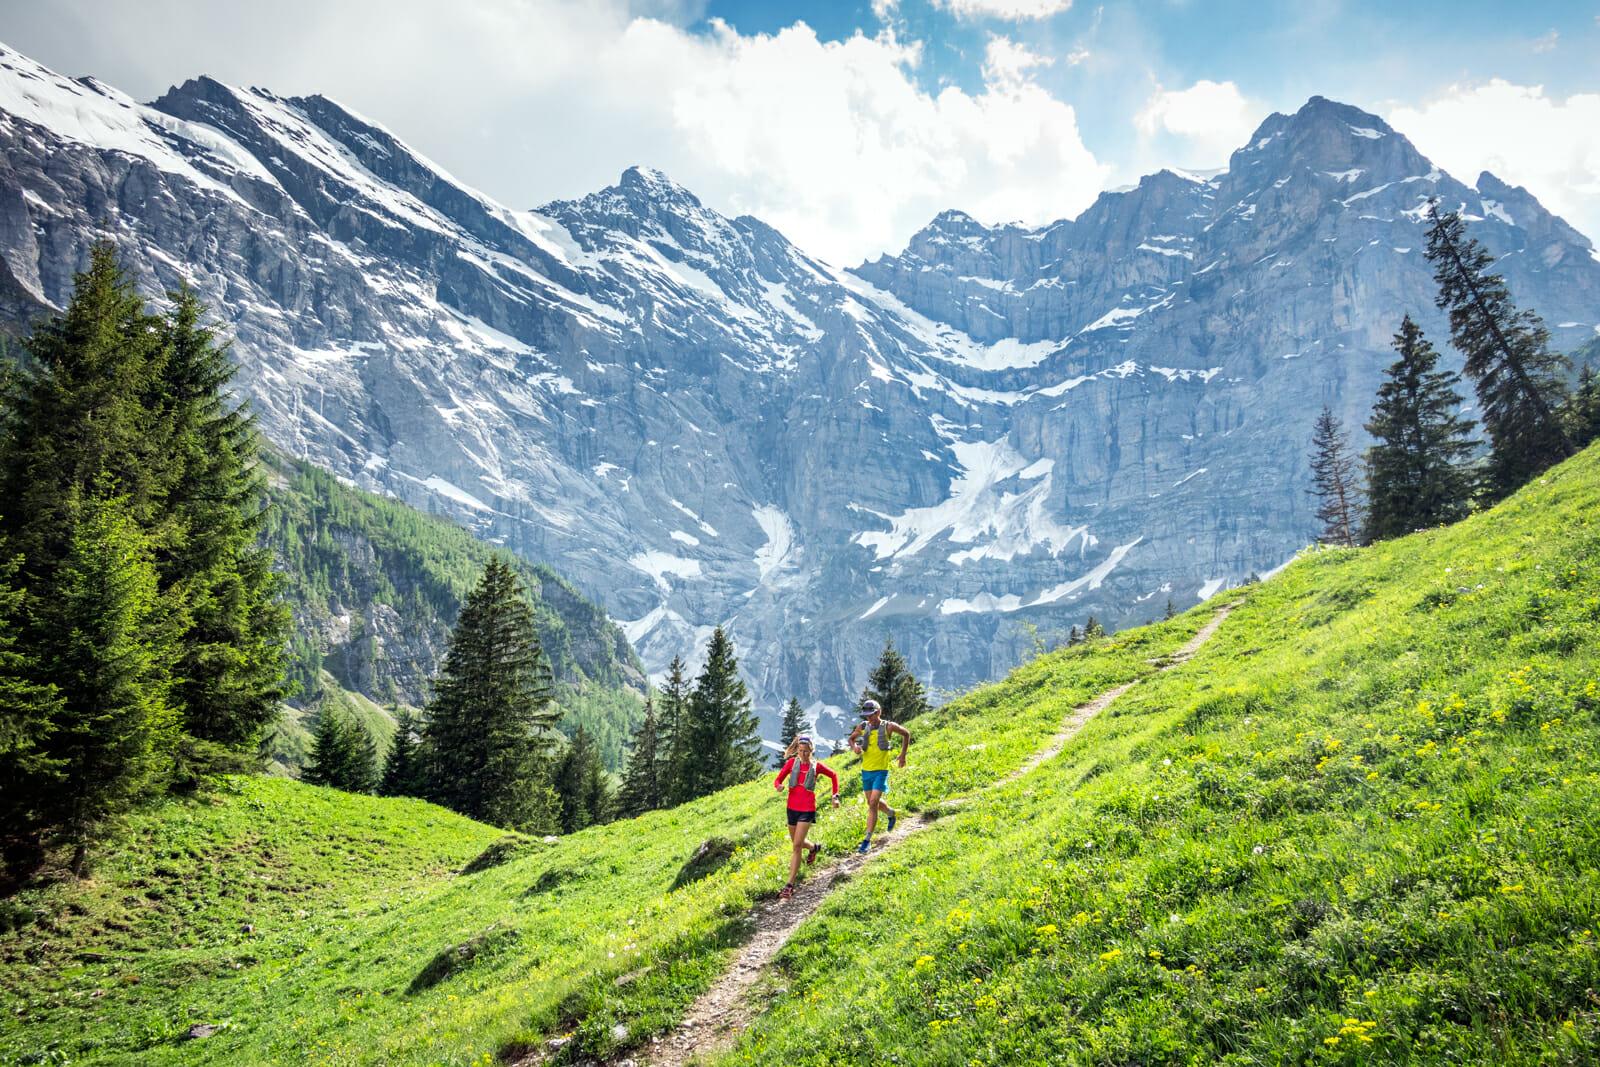 Trail running near Gimmelwald, above Lauterbrunnen, Switzerland. (Photo: PatitucciPhoto)